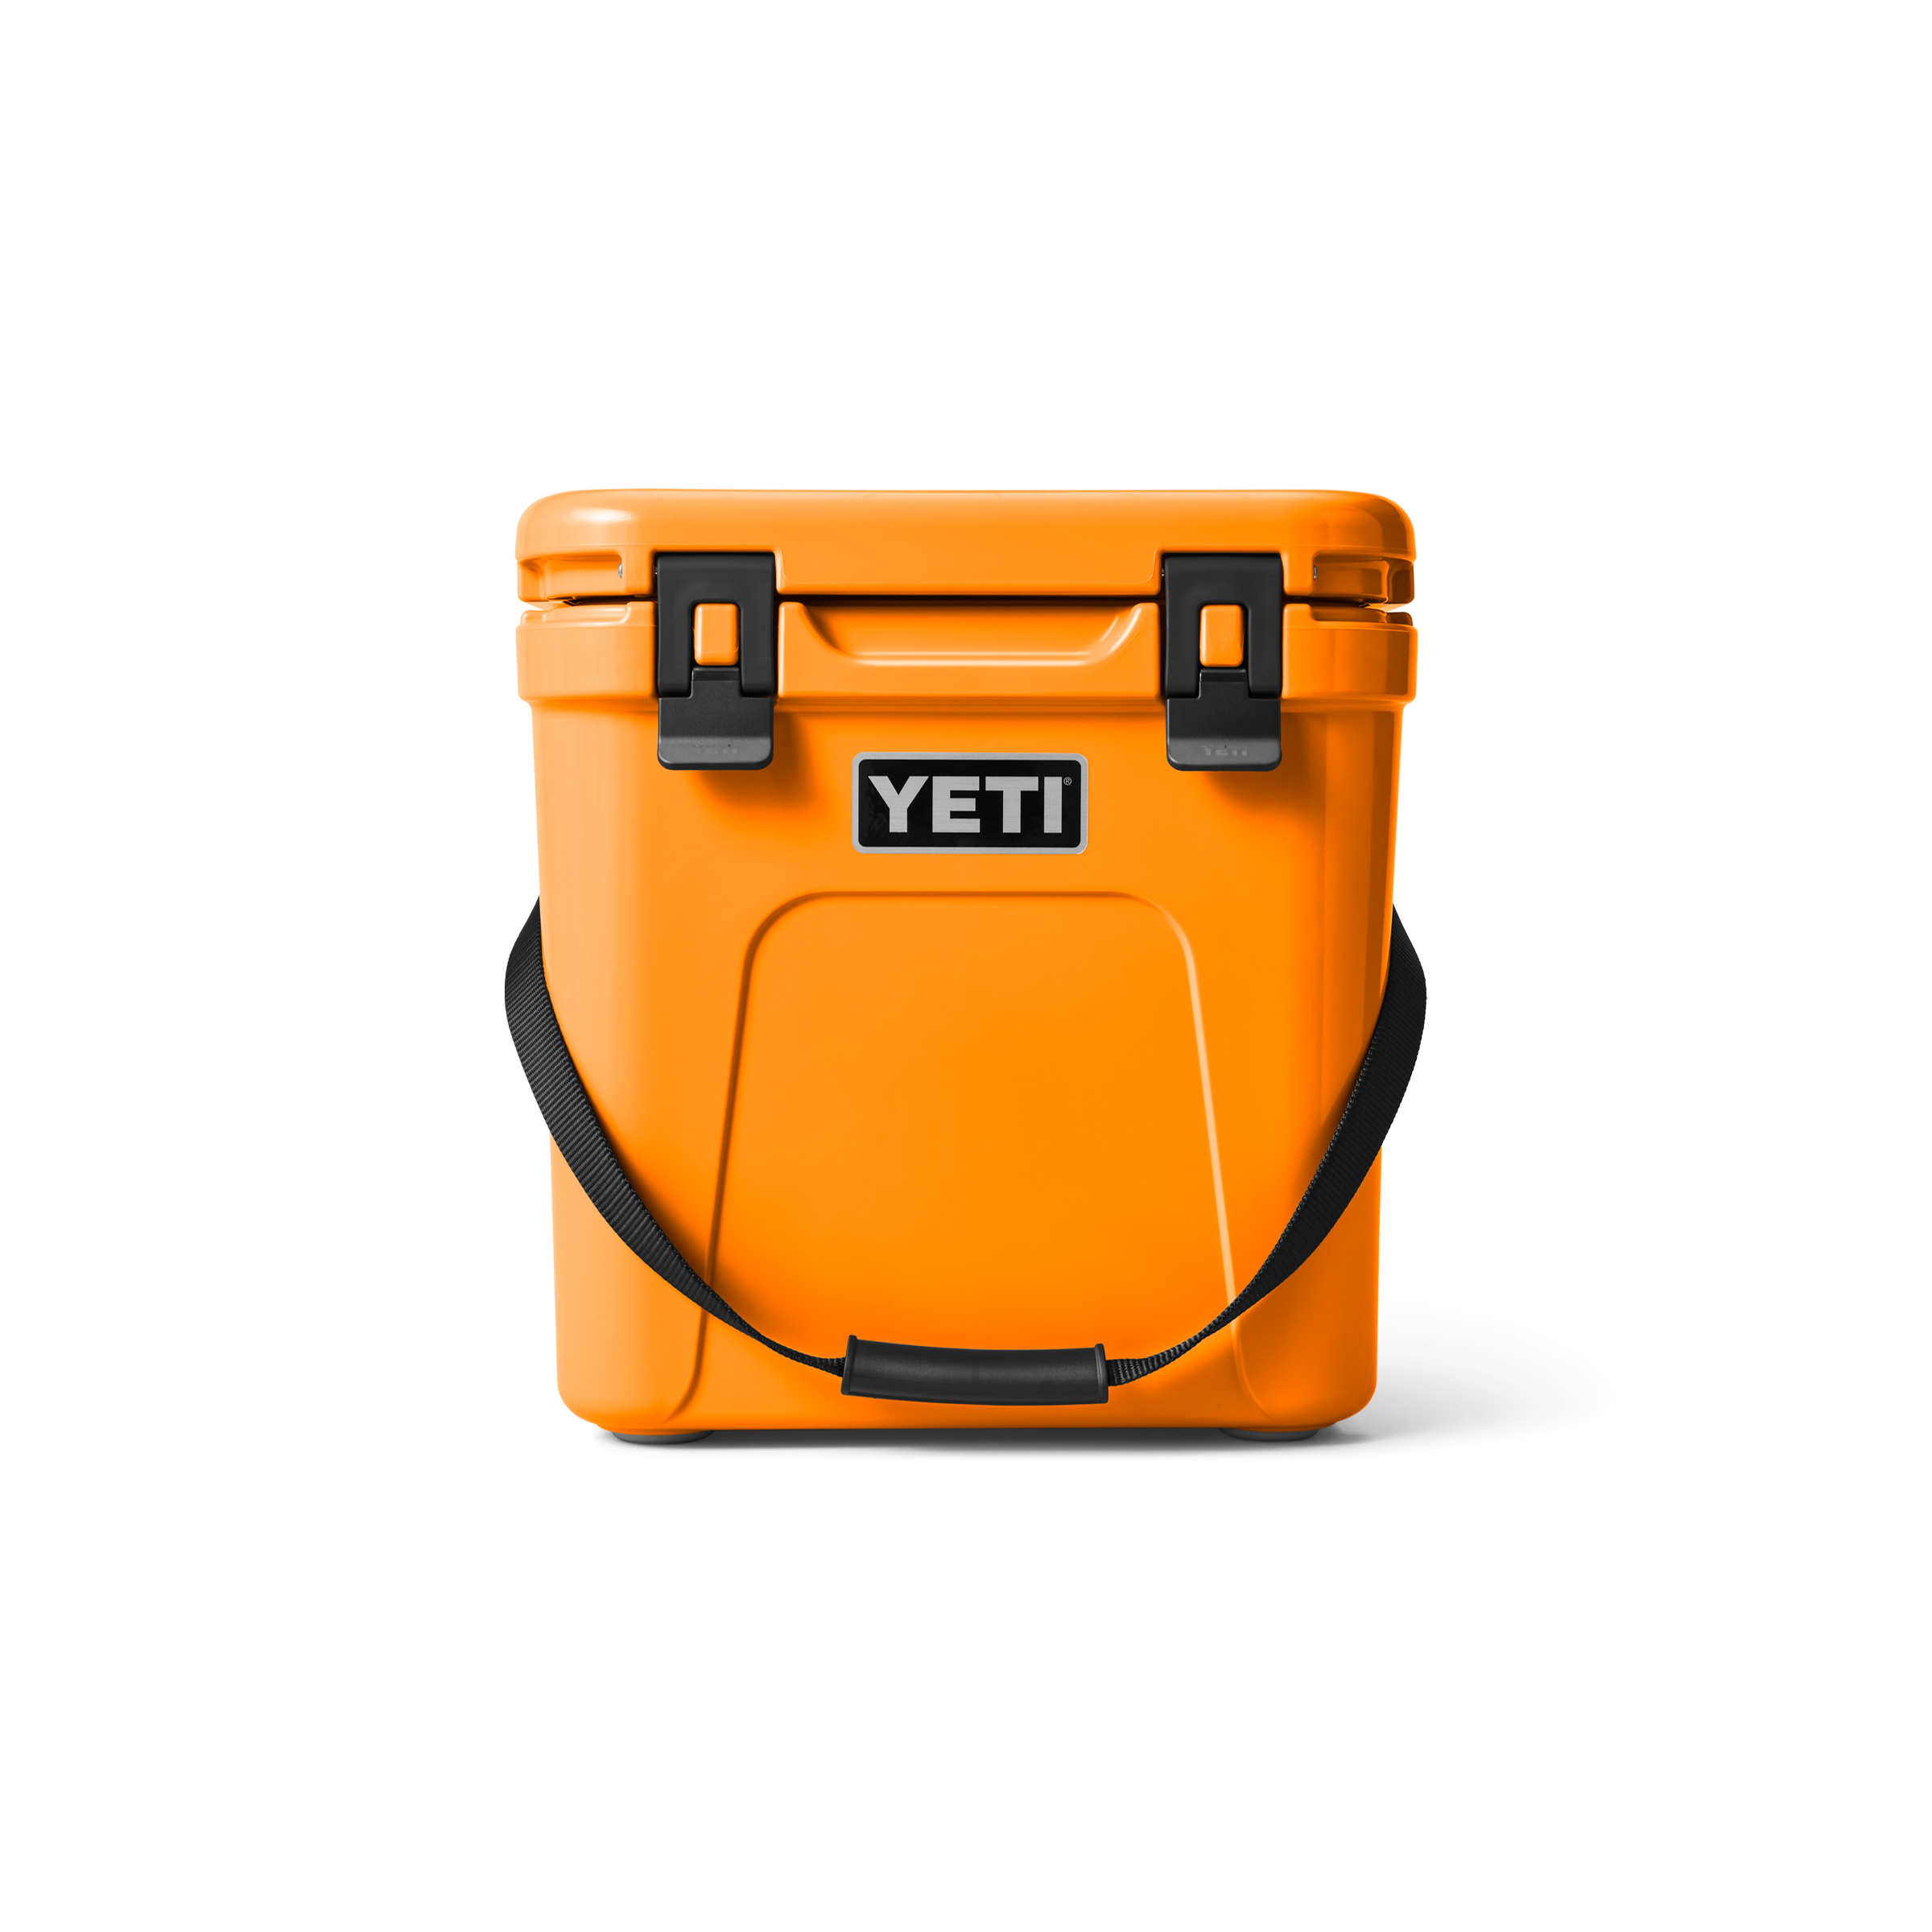 YETI Australia | Premium Coolers, Drinkware, Apparel and Accessories